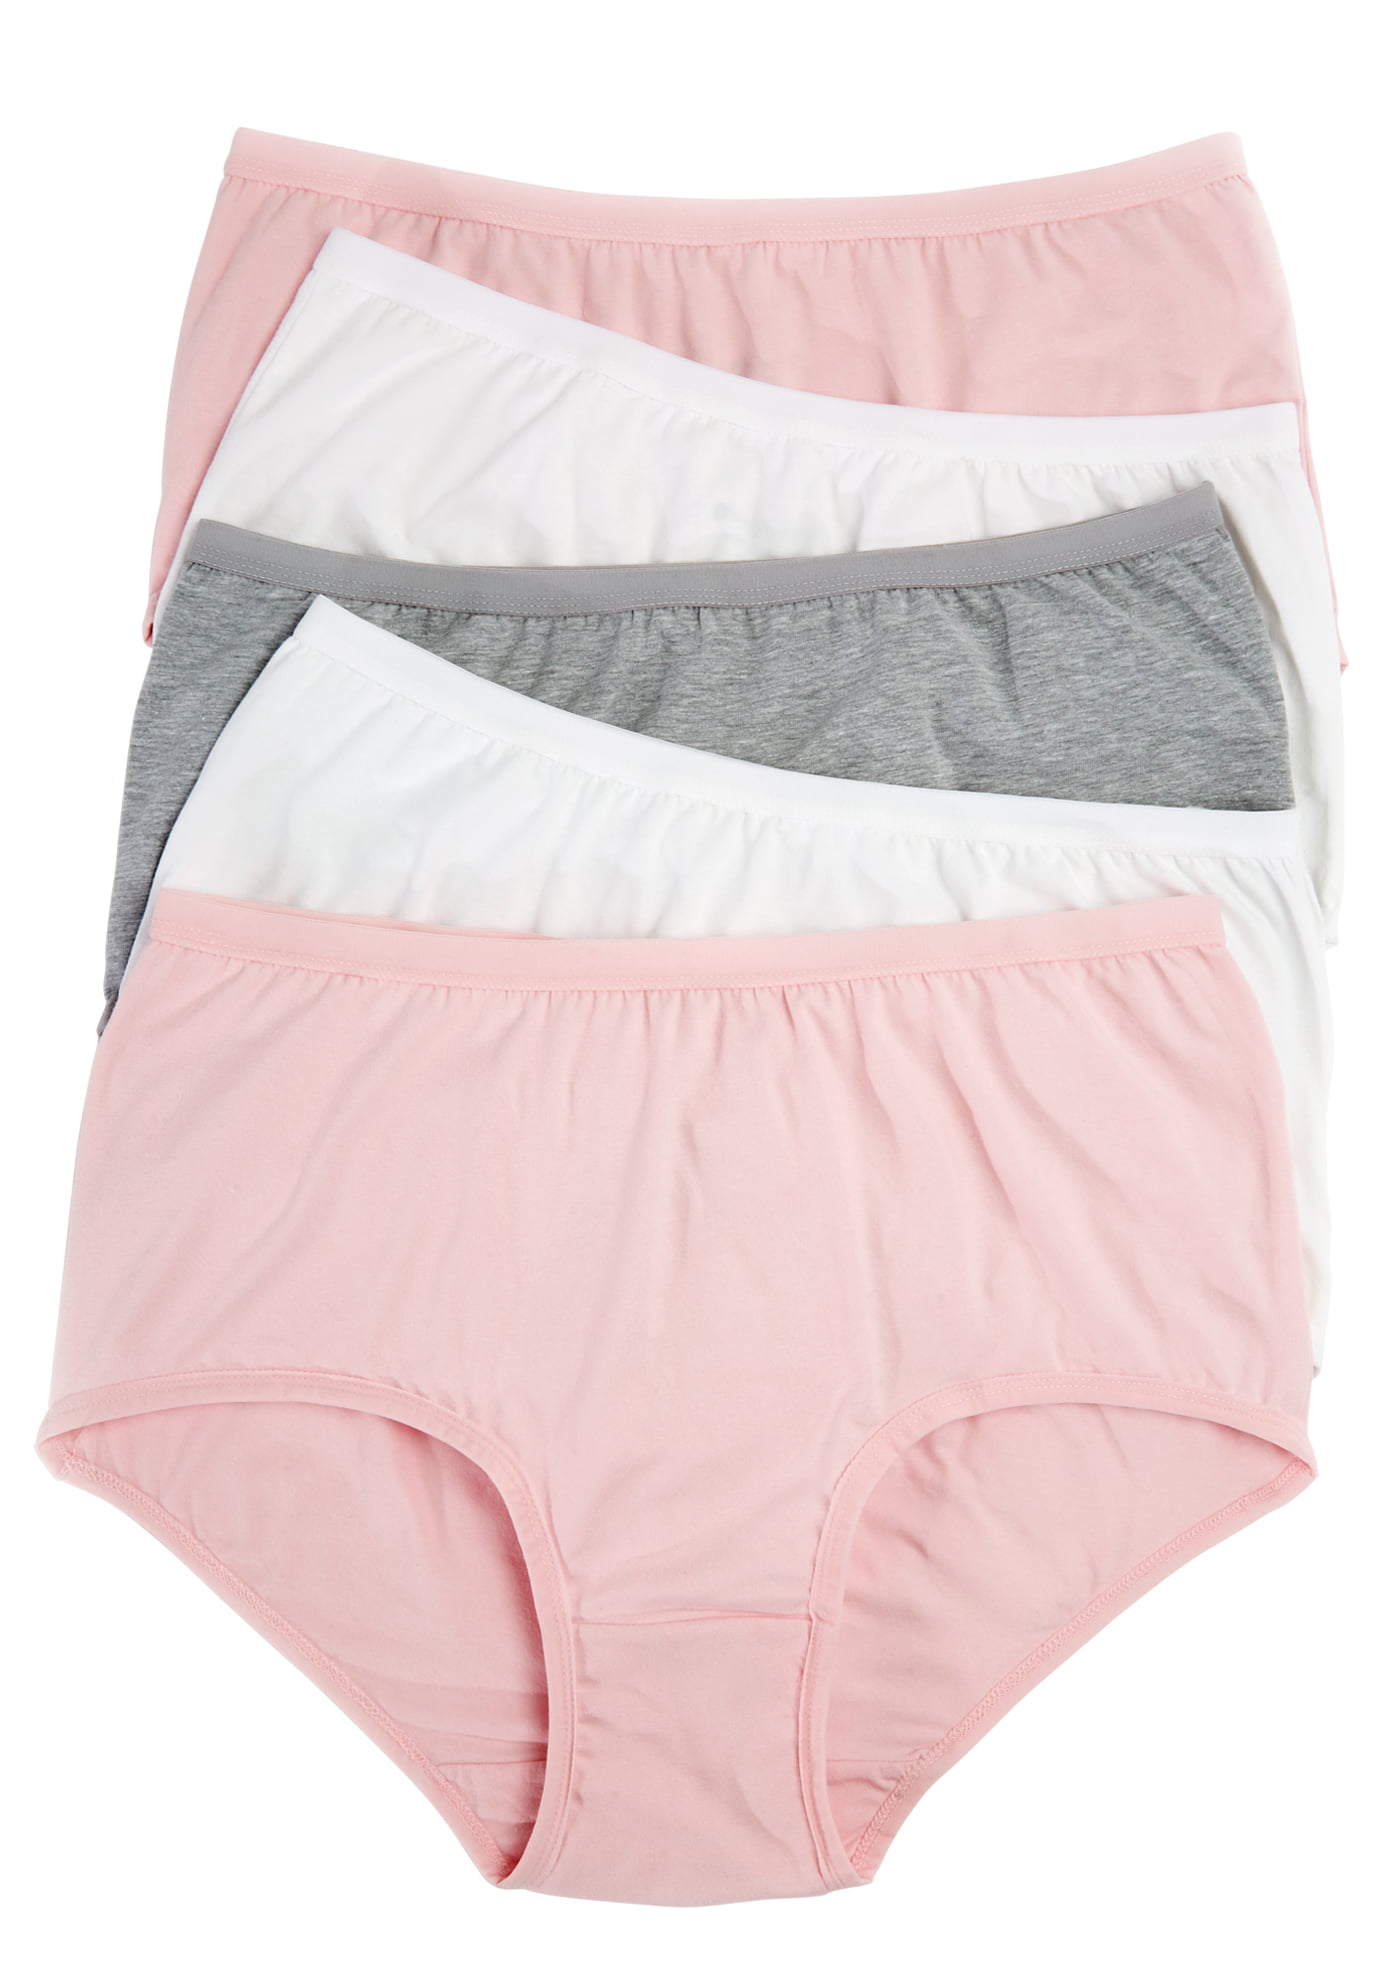 Comfort Choice Comfort Choice Women S Plus Size 5 Pack Stretch Cotton Full Cut Brief Underwear